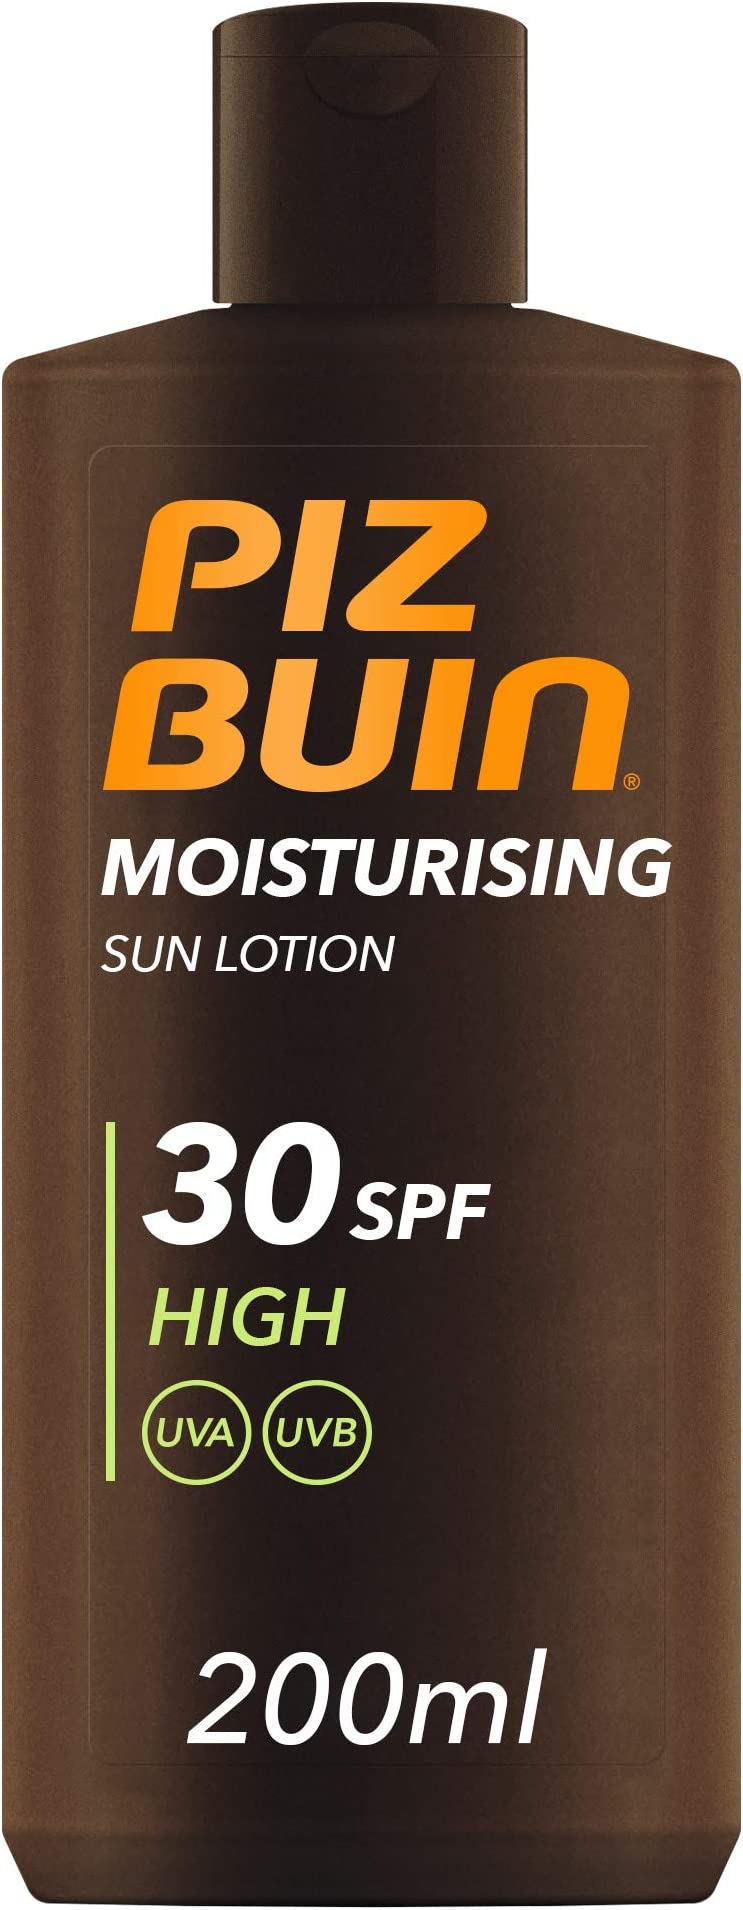 Image of Piz Buin Moisturising Sun Lotion SPF30, 200ml (Pack of 1)